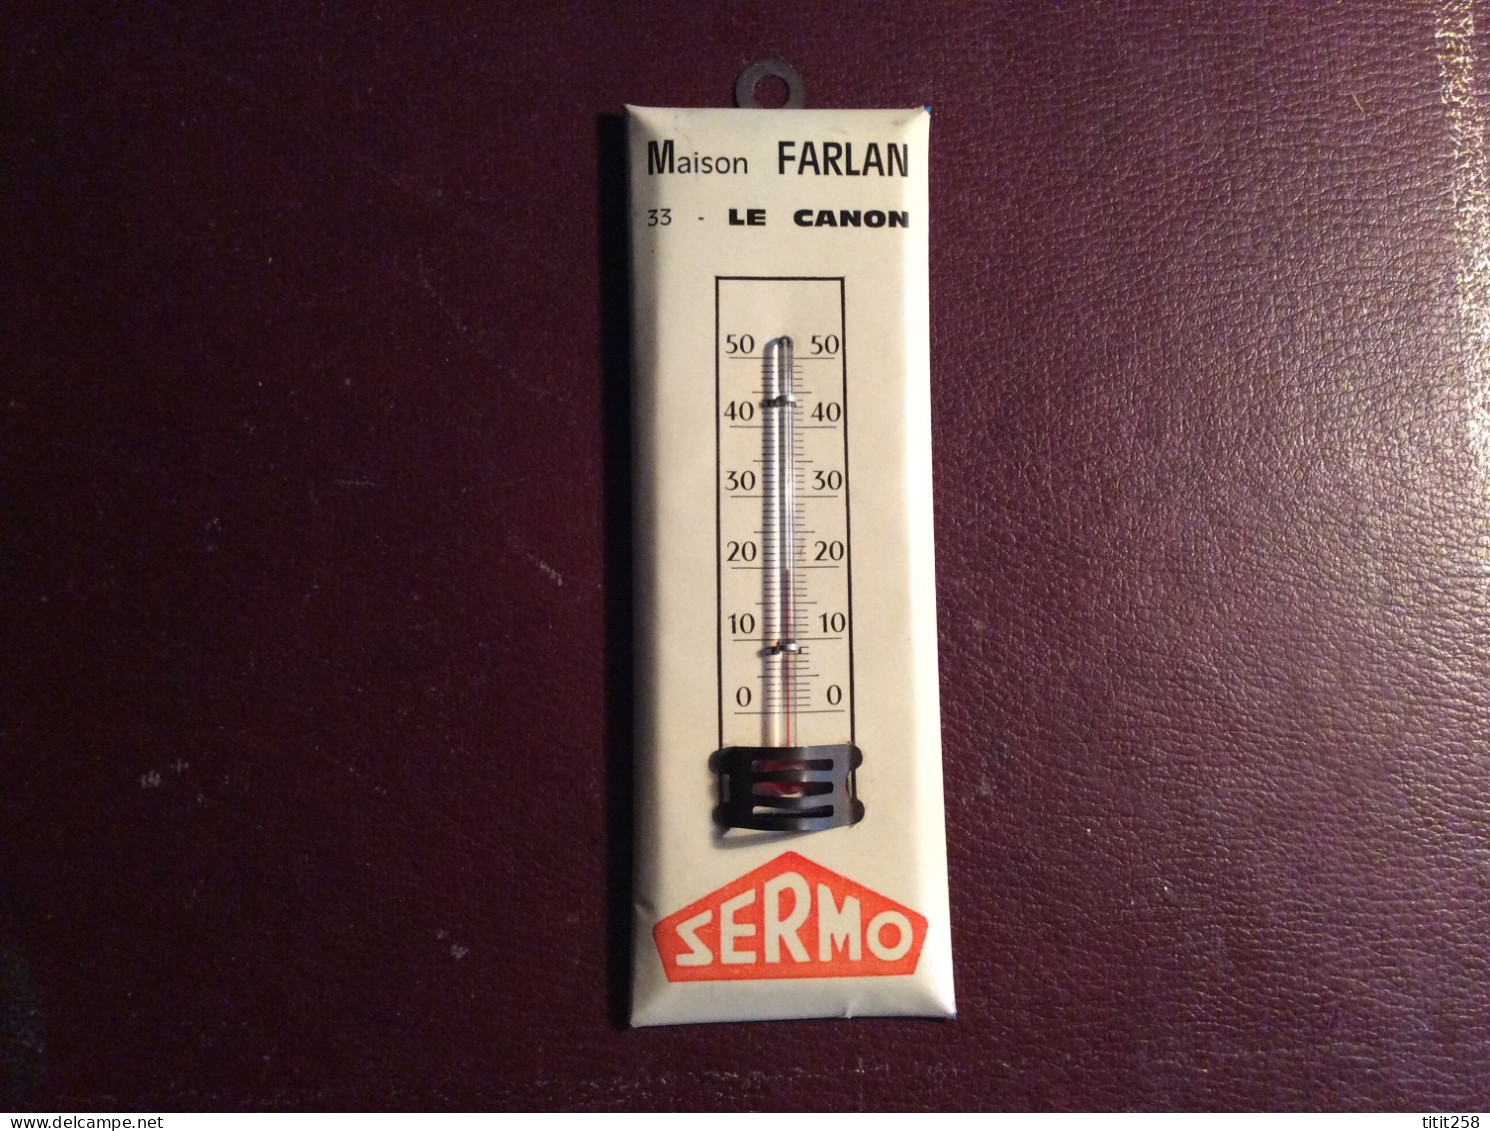 Joli Thermométre Glacoide  Publicitaire Magasin SERMO  / LE CANON 33 CAP FERRET Bassin D'arcachon GIRONDE - Blechschilder (ab 1960)